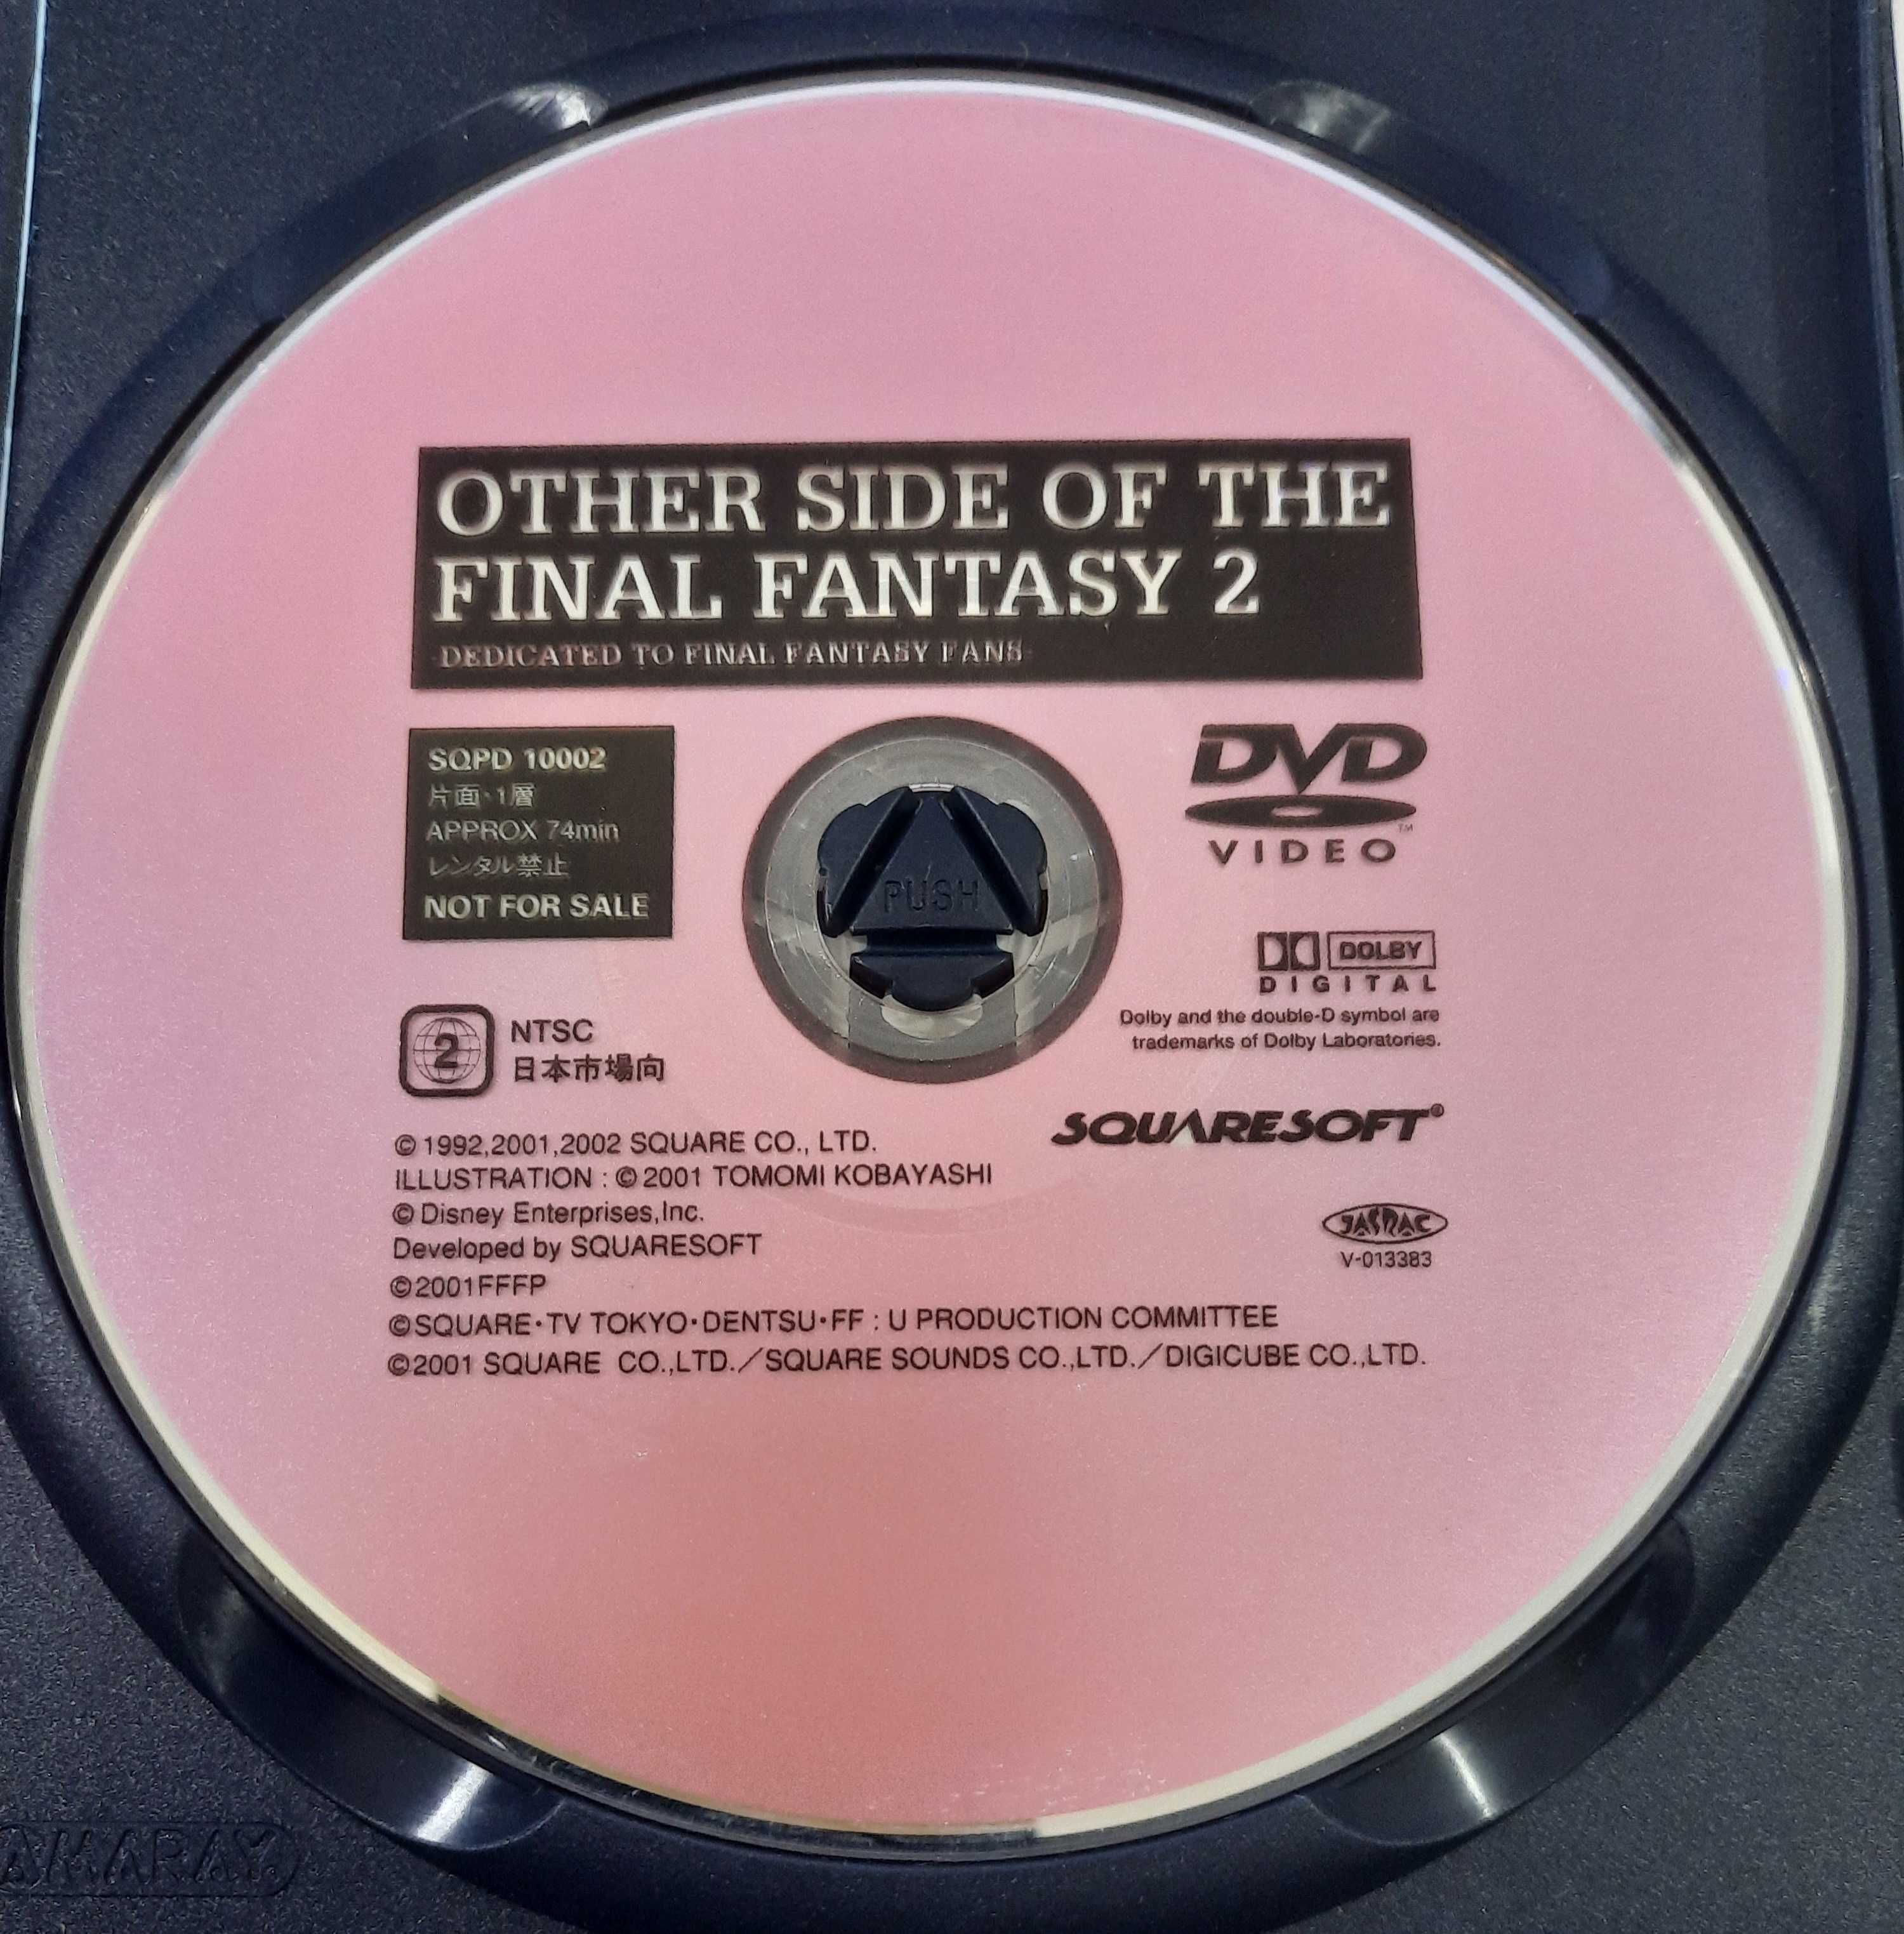 Final Fantasy X International / PS2 [NTSC-J]